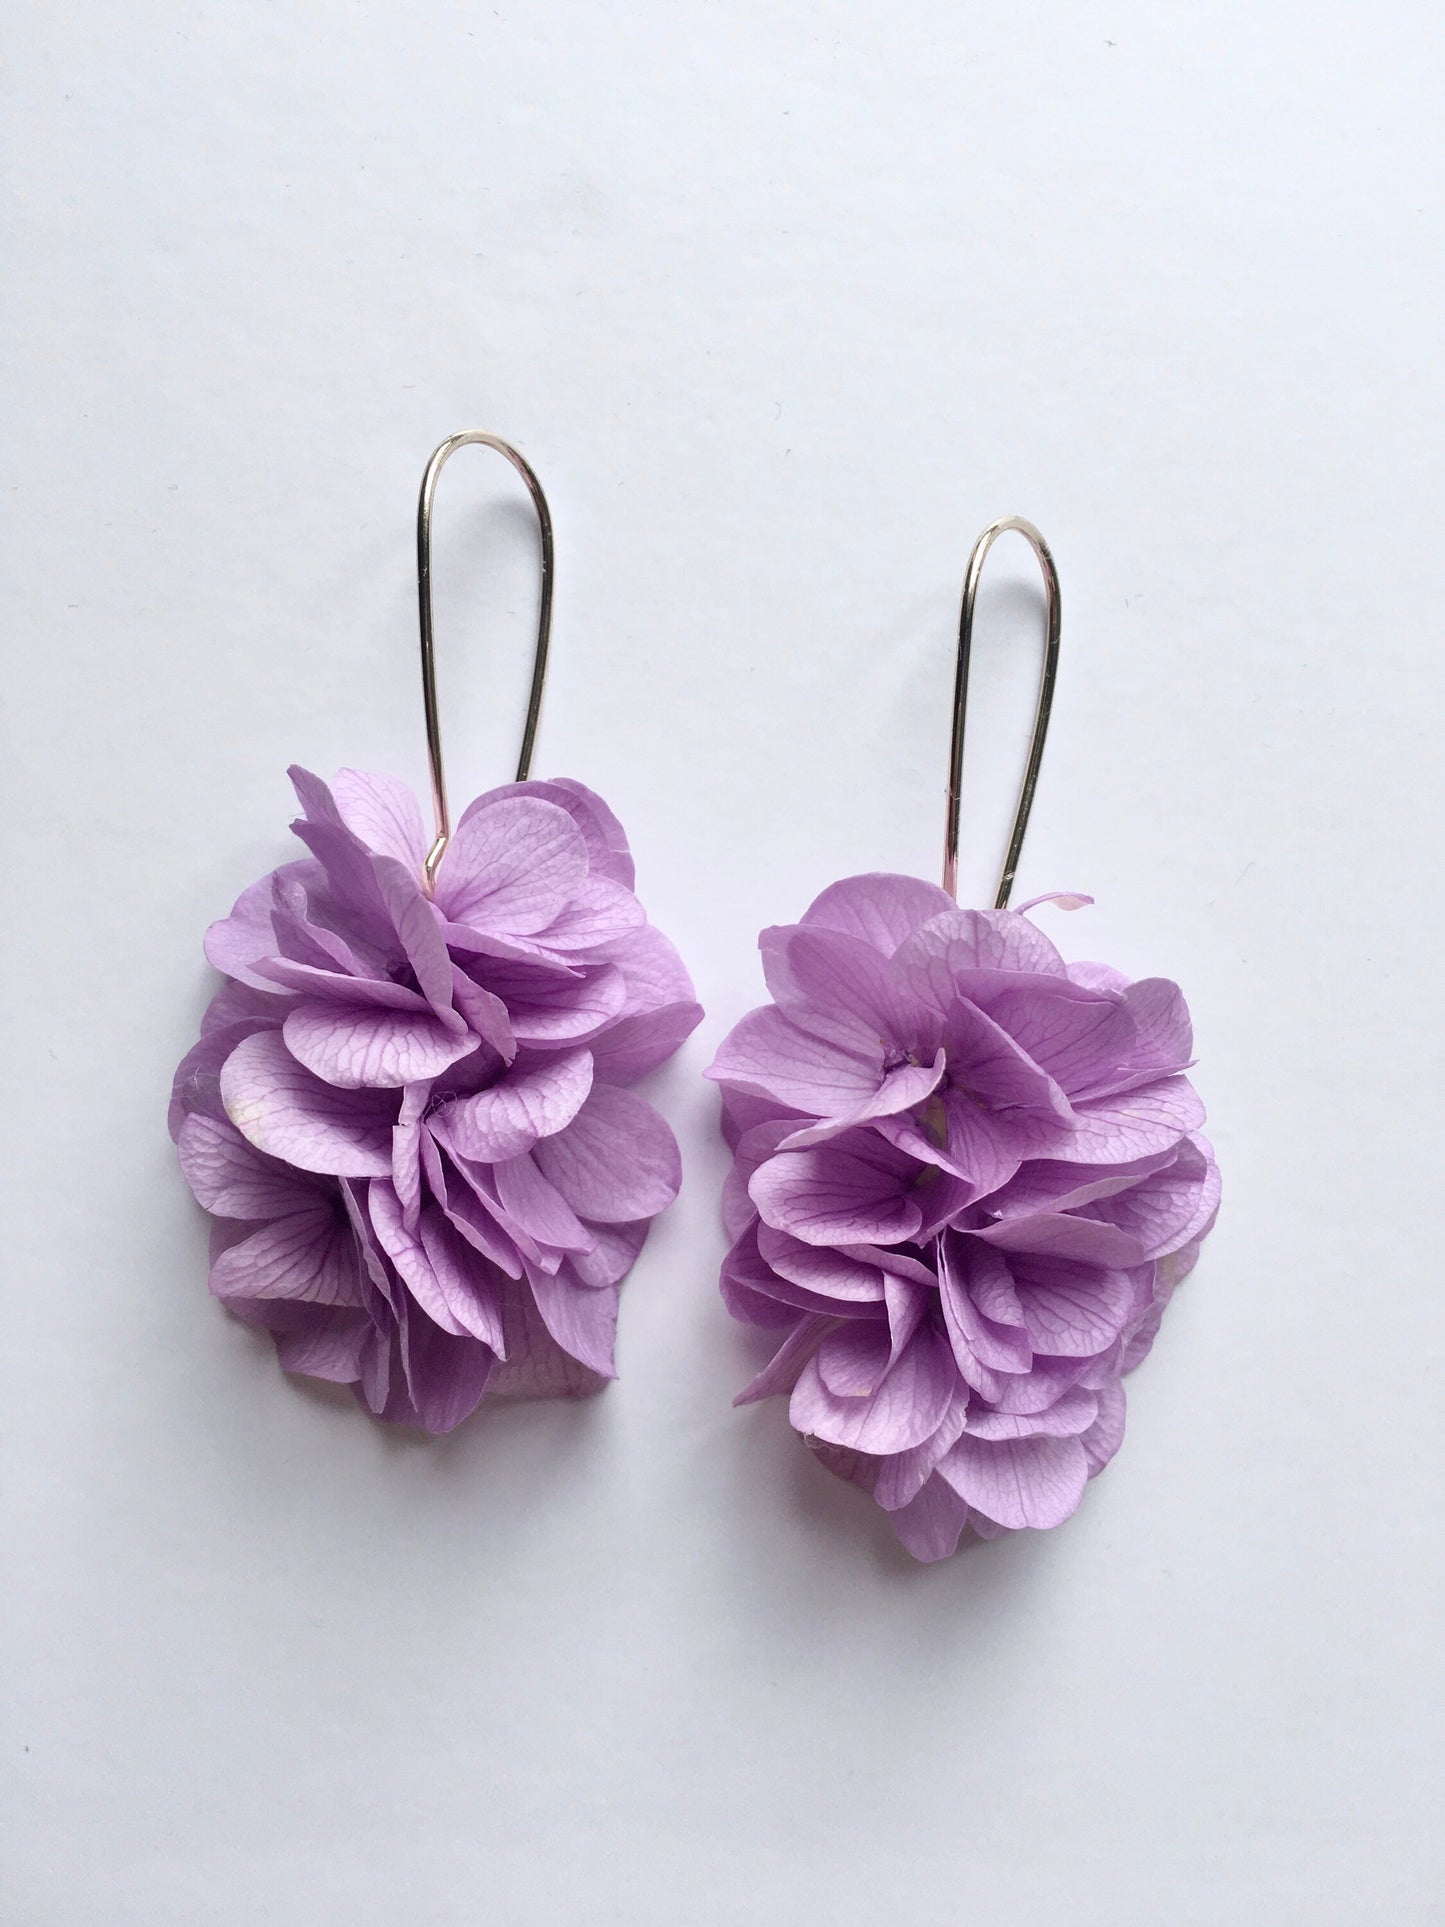 Lilac Flower Earrings, Boho Barn Wedding Accessories UK, 18ct Gold Bridal Jewellery, Unique Dried Floral Earrings, Purple Hydrangea Jewelry